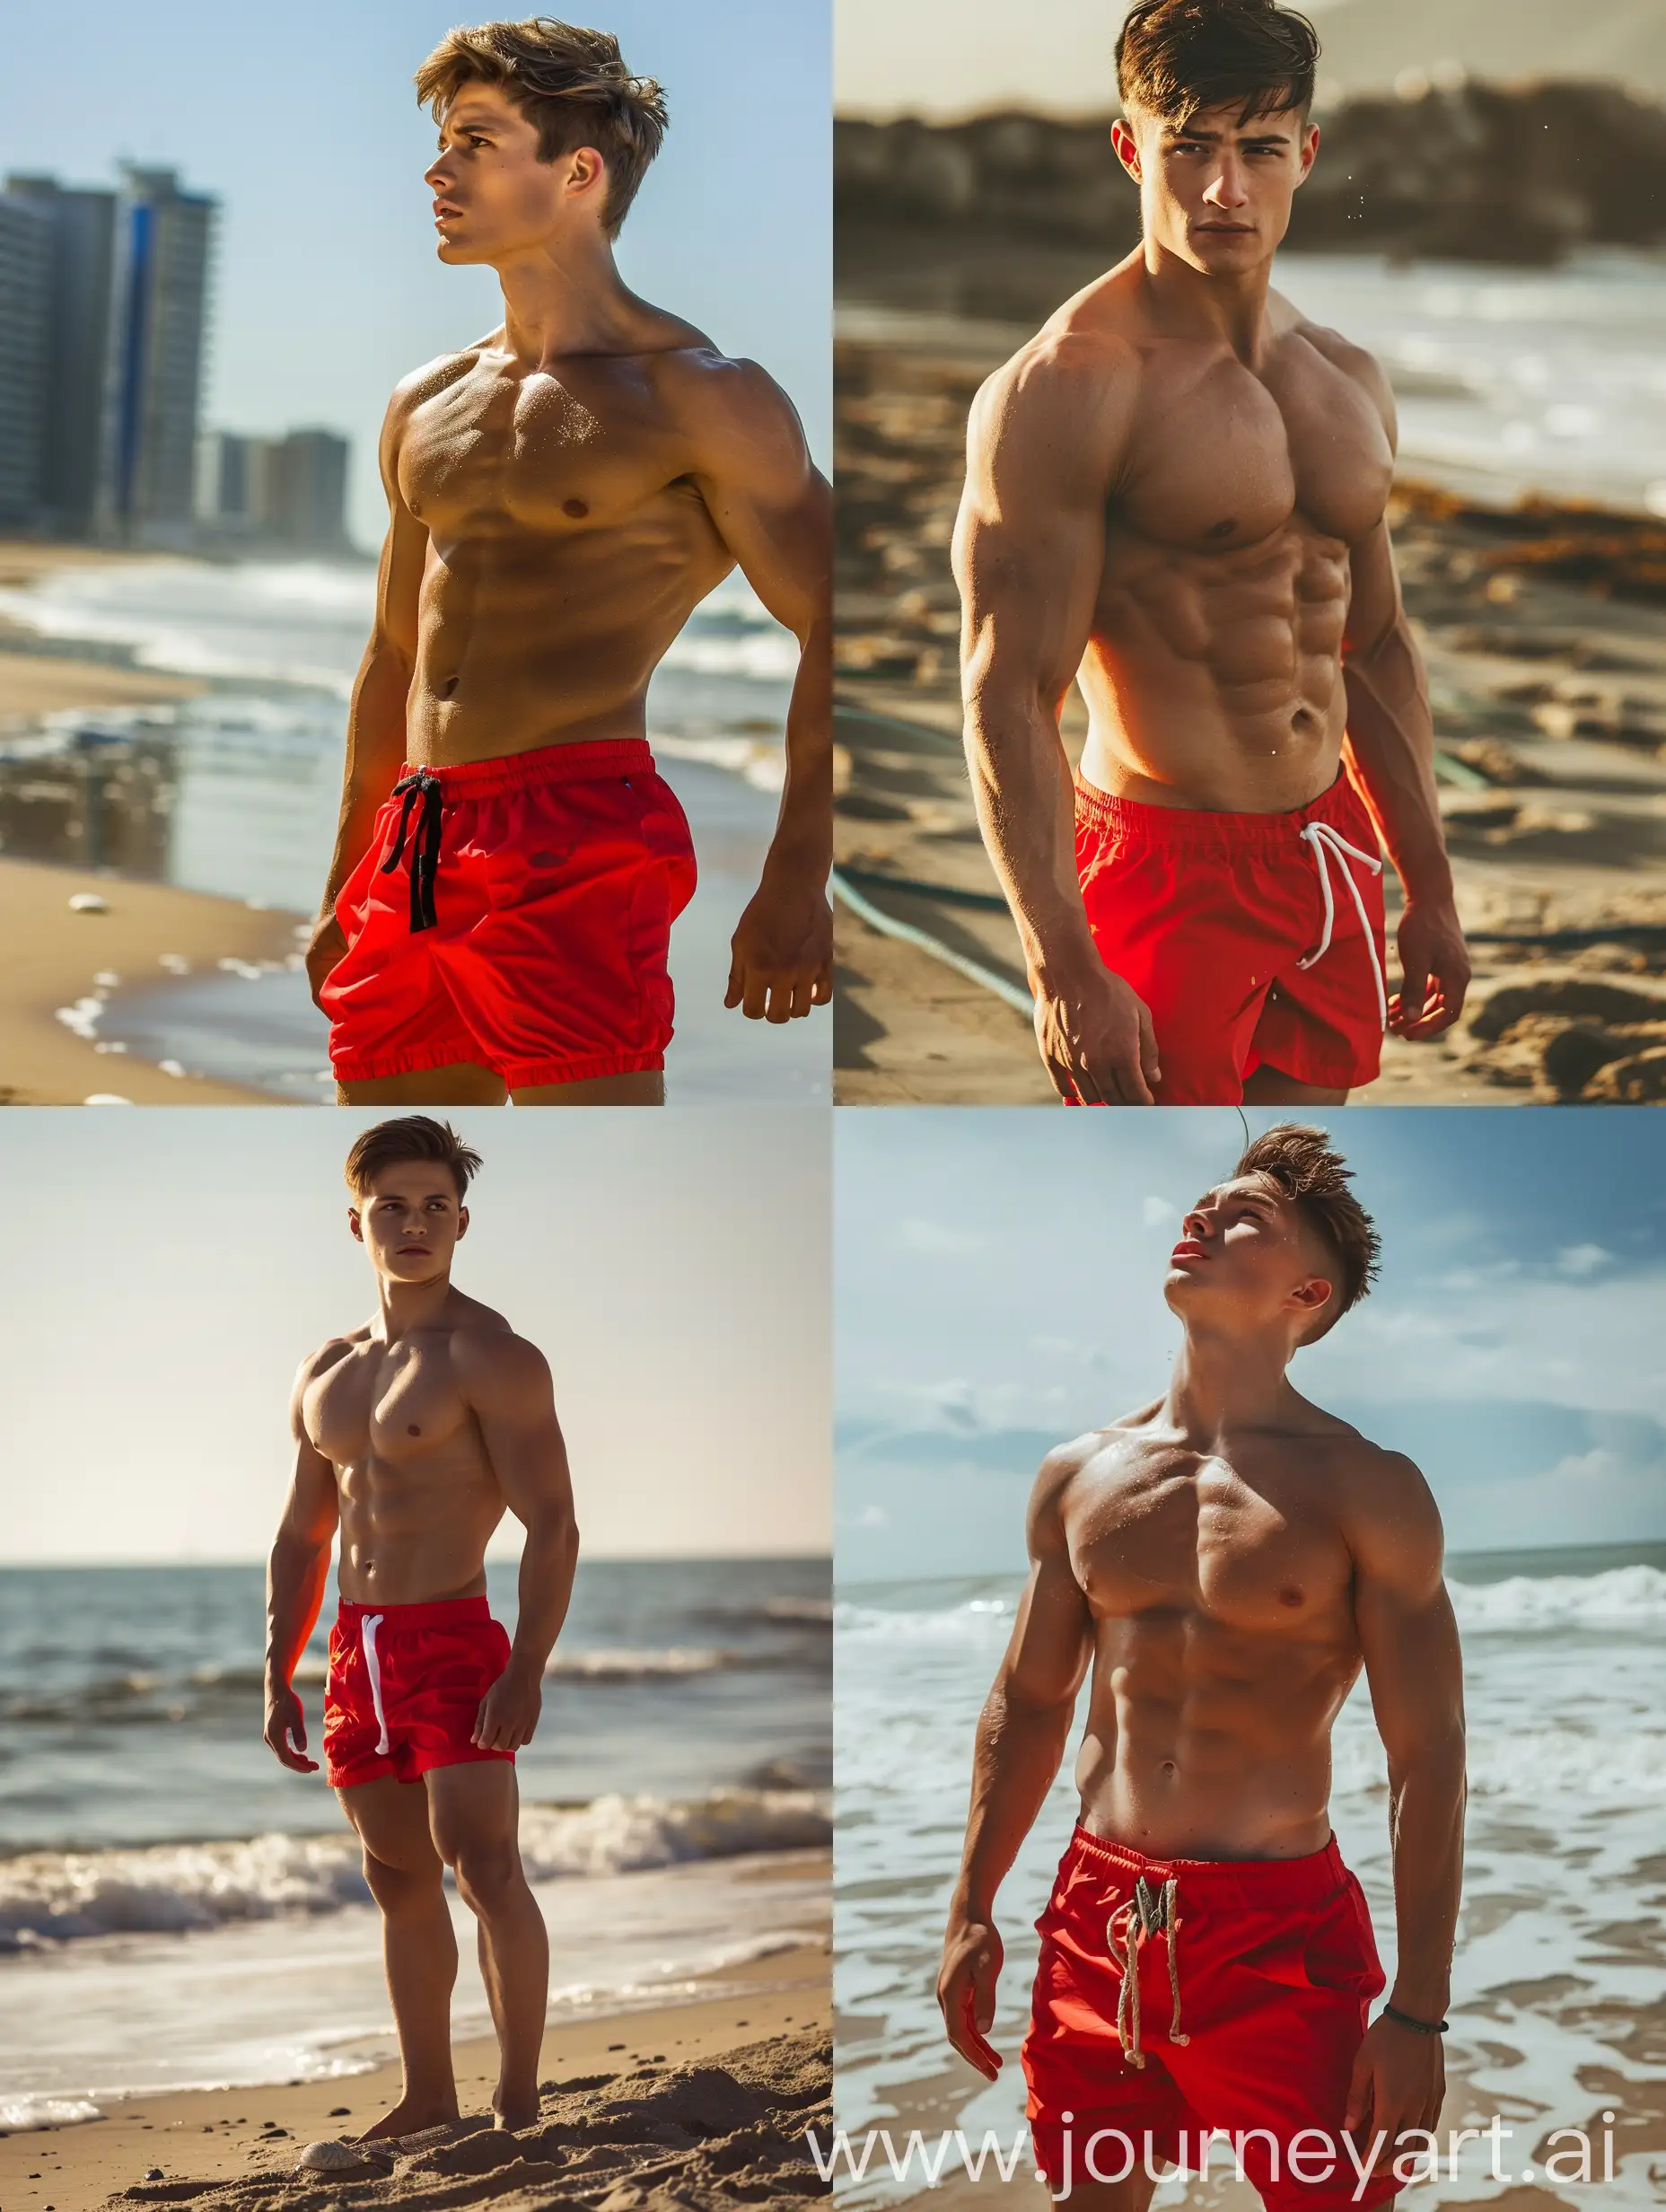 Muscular-Boy-Enjoying-Beach-Day-in-Vibrant-Red-Shorts